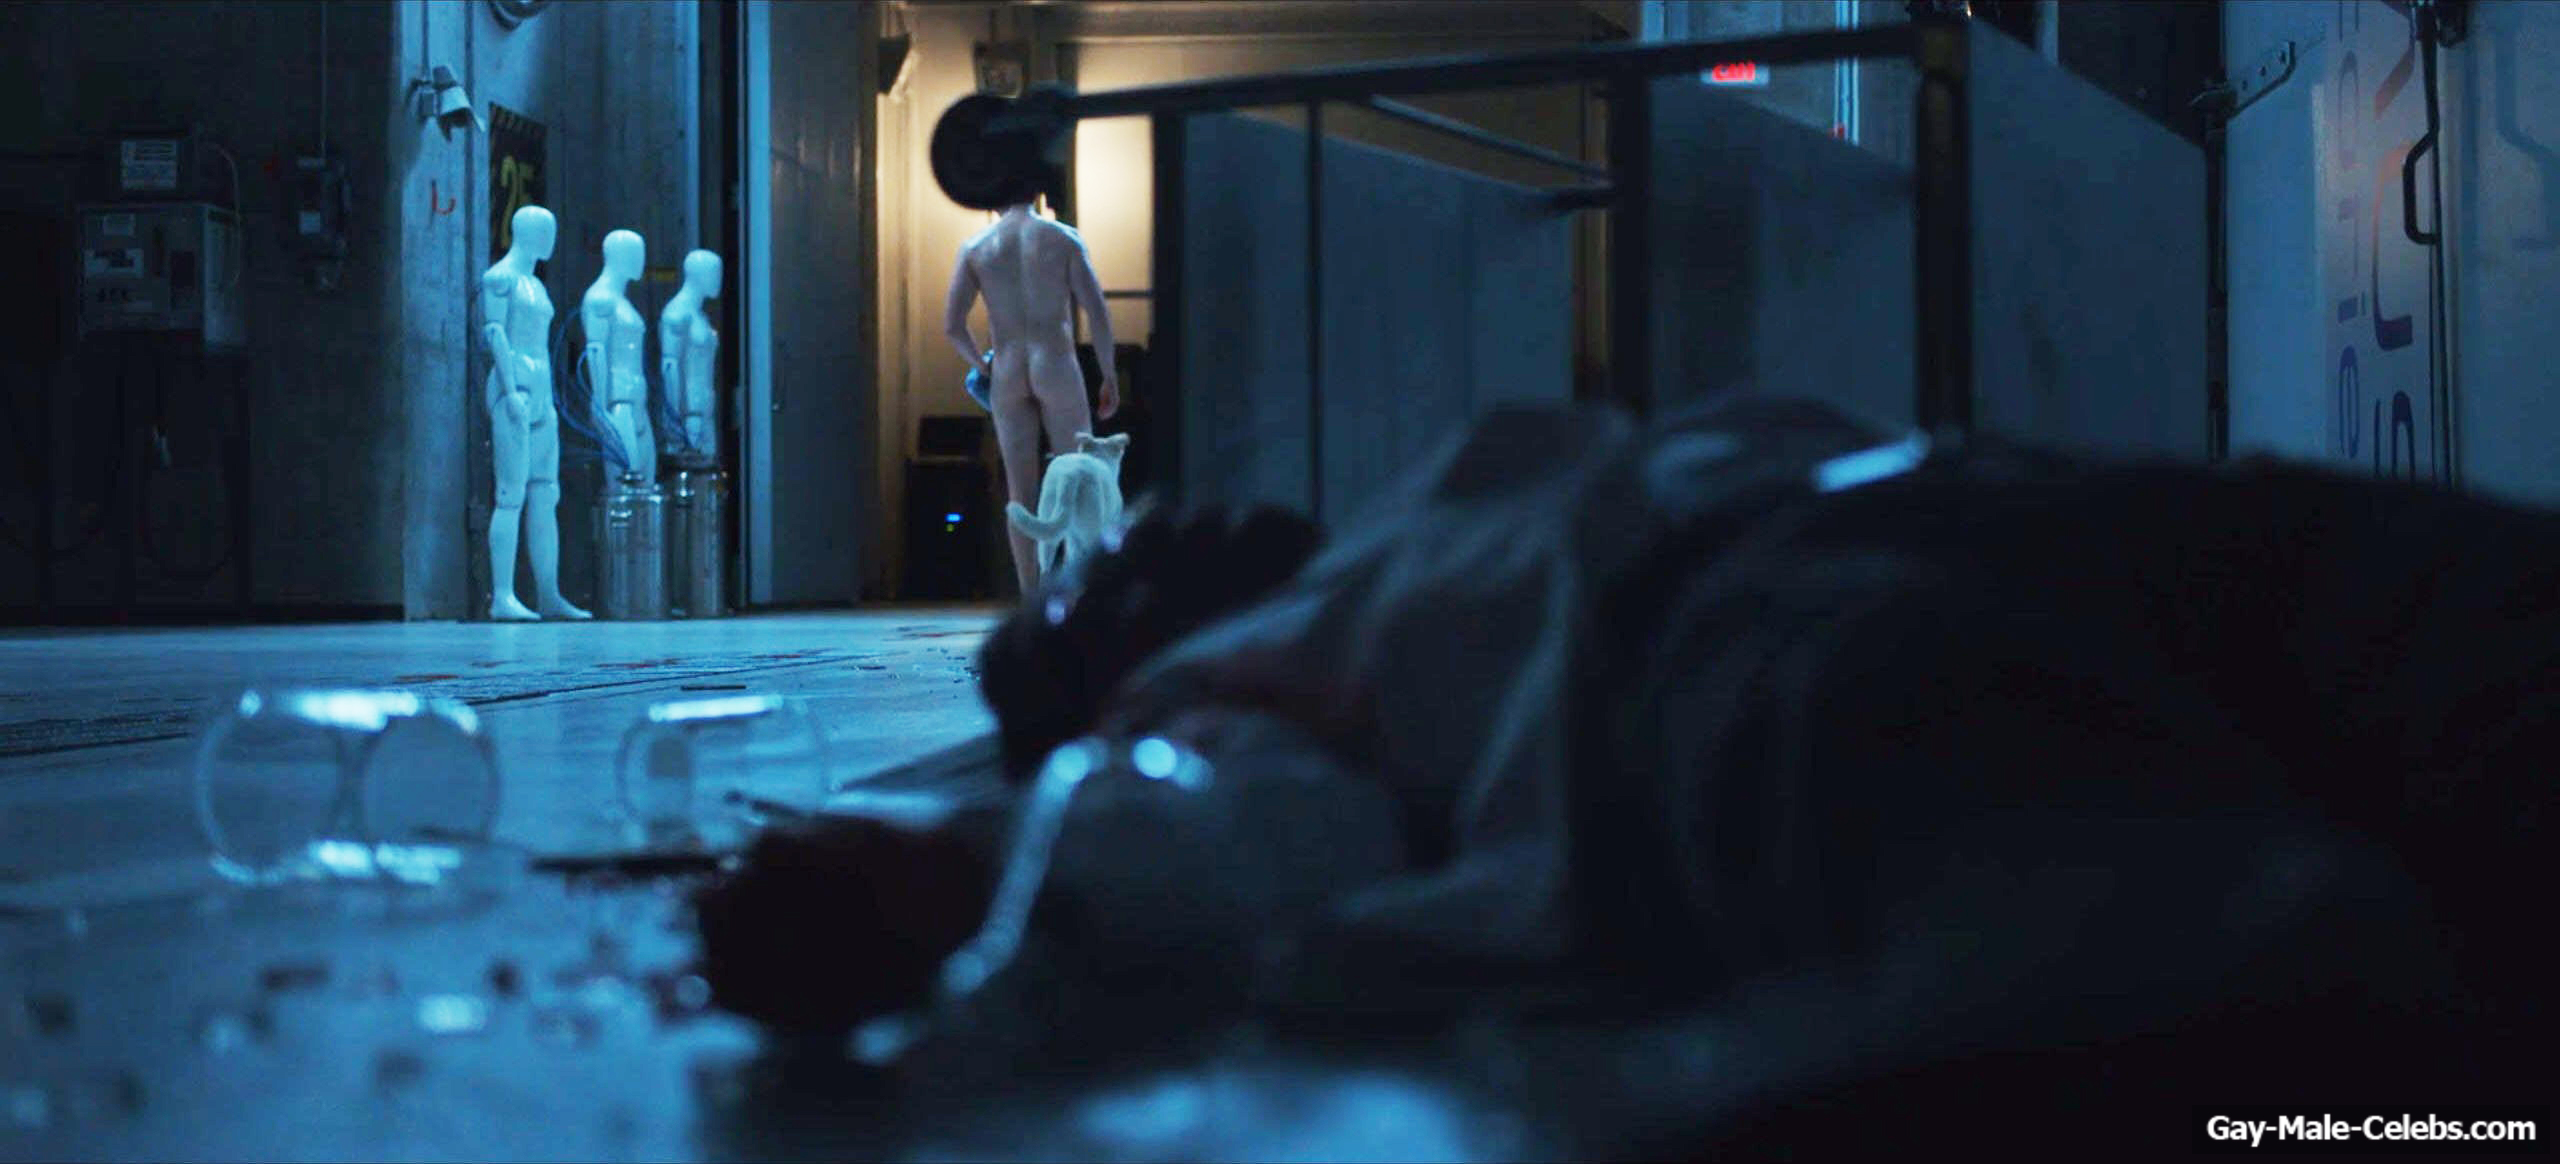 Joshua Orpin naked scene from Titans. 